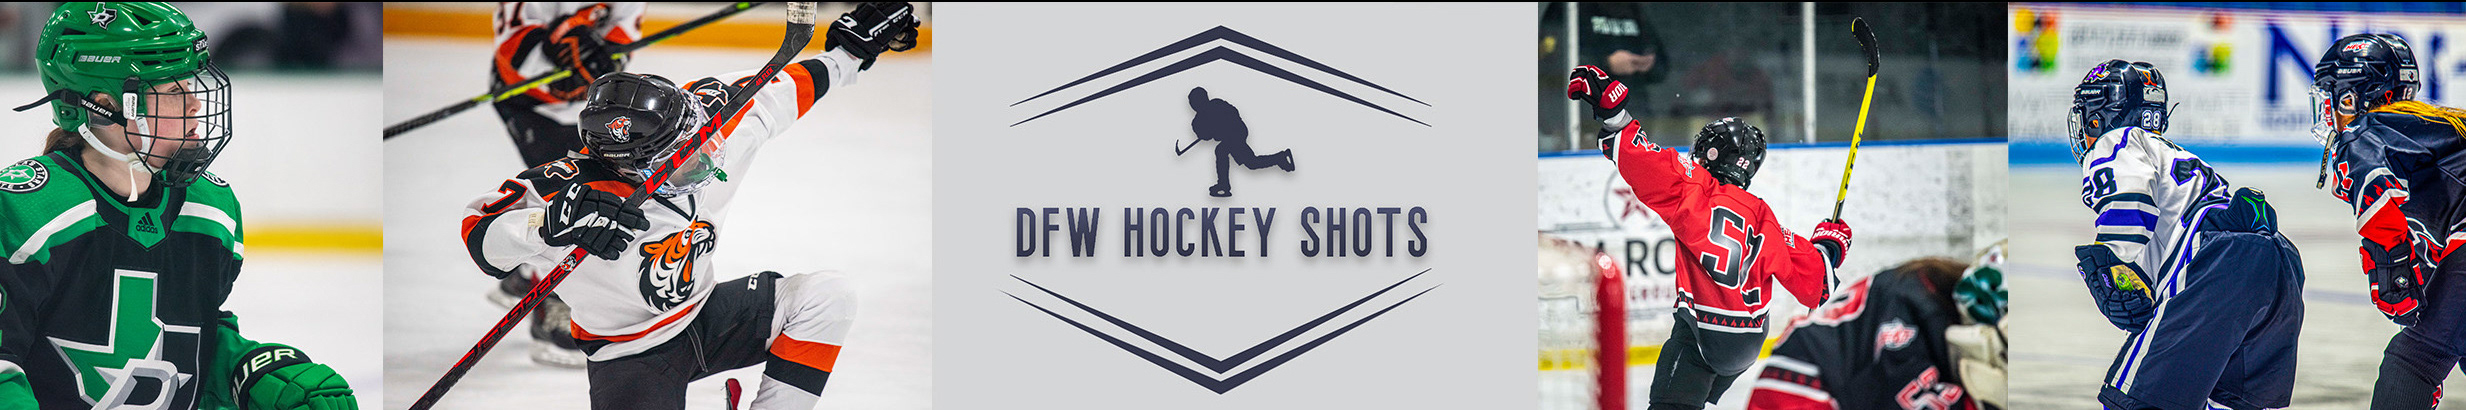 DFW Hockey Shotss profilbanner